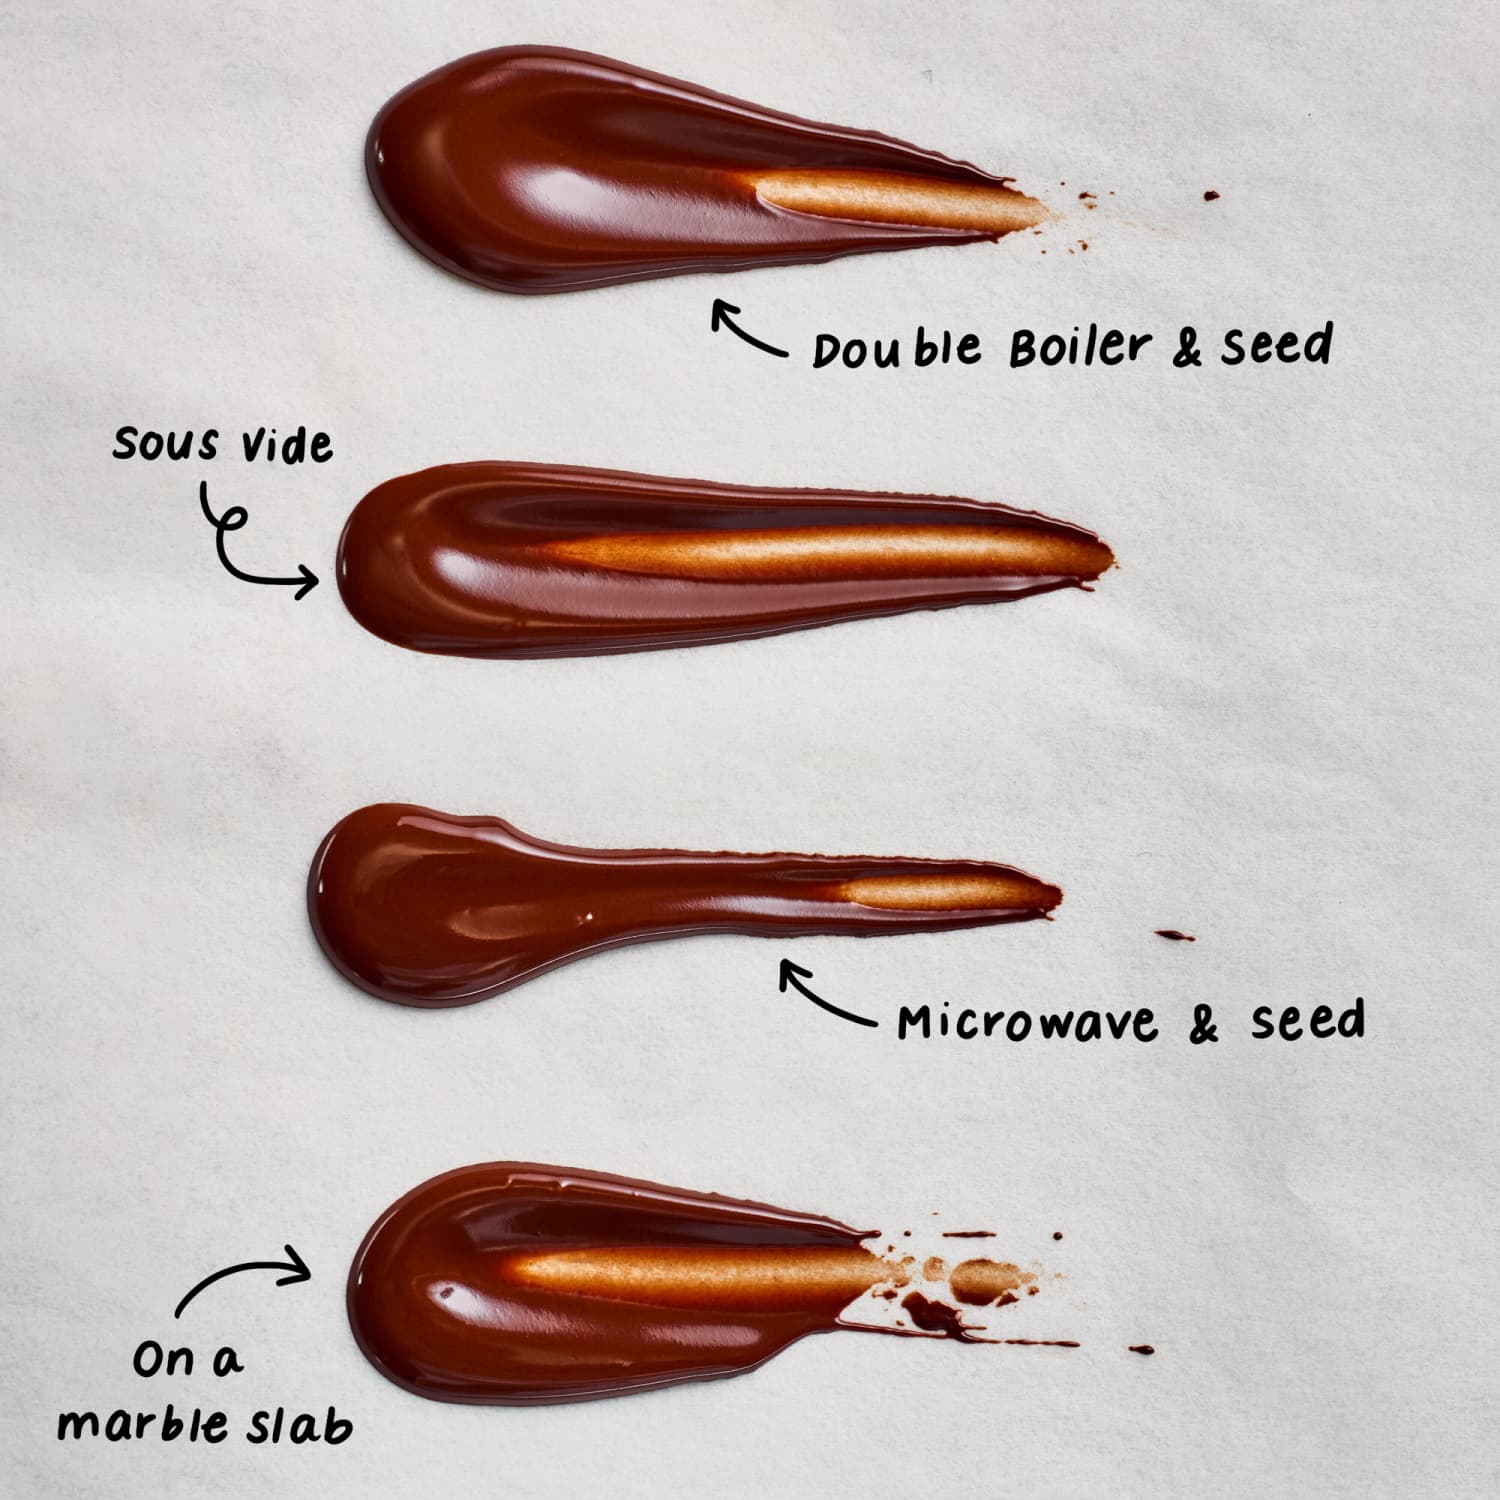 How to Temper Chocolate Recipe